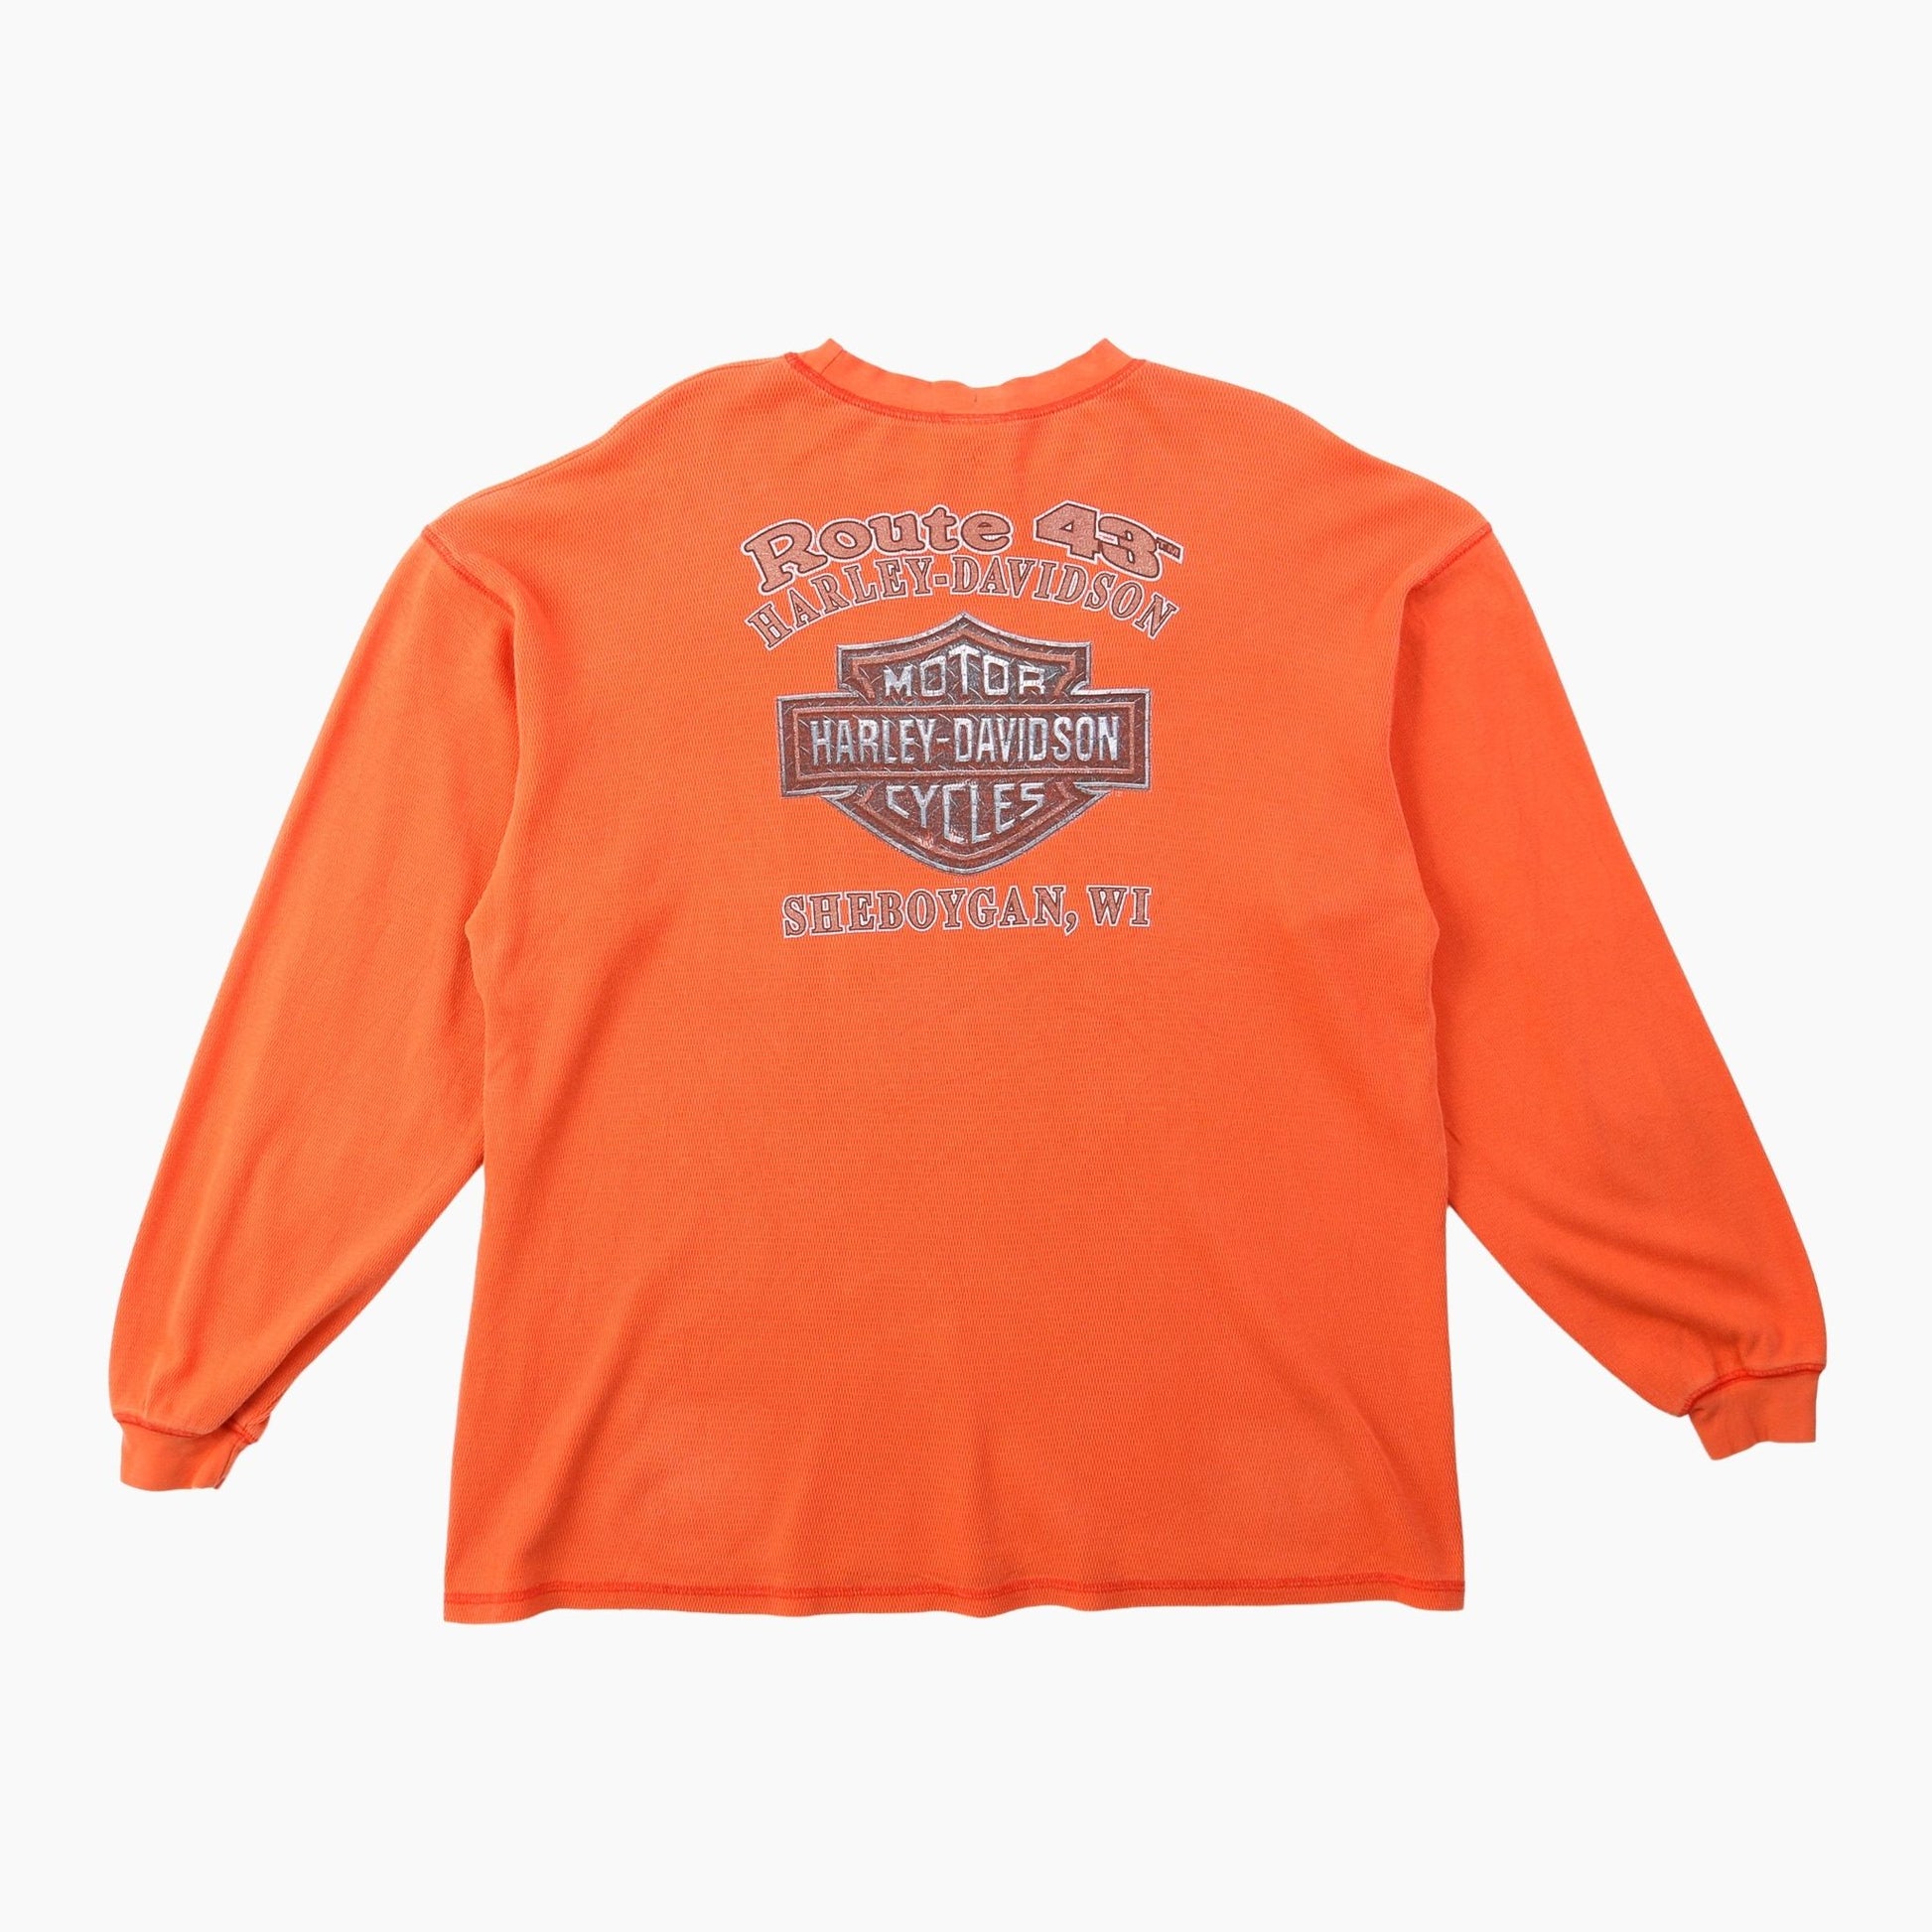 'Route 45 Sheboygan' Thermal T-Shirt - American Madness